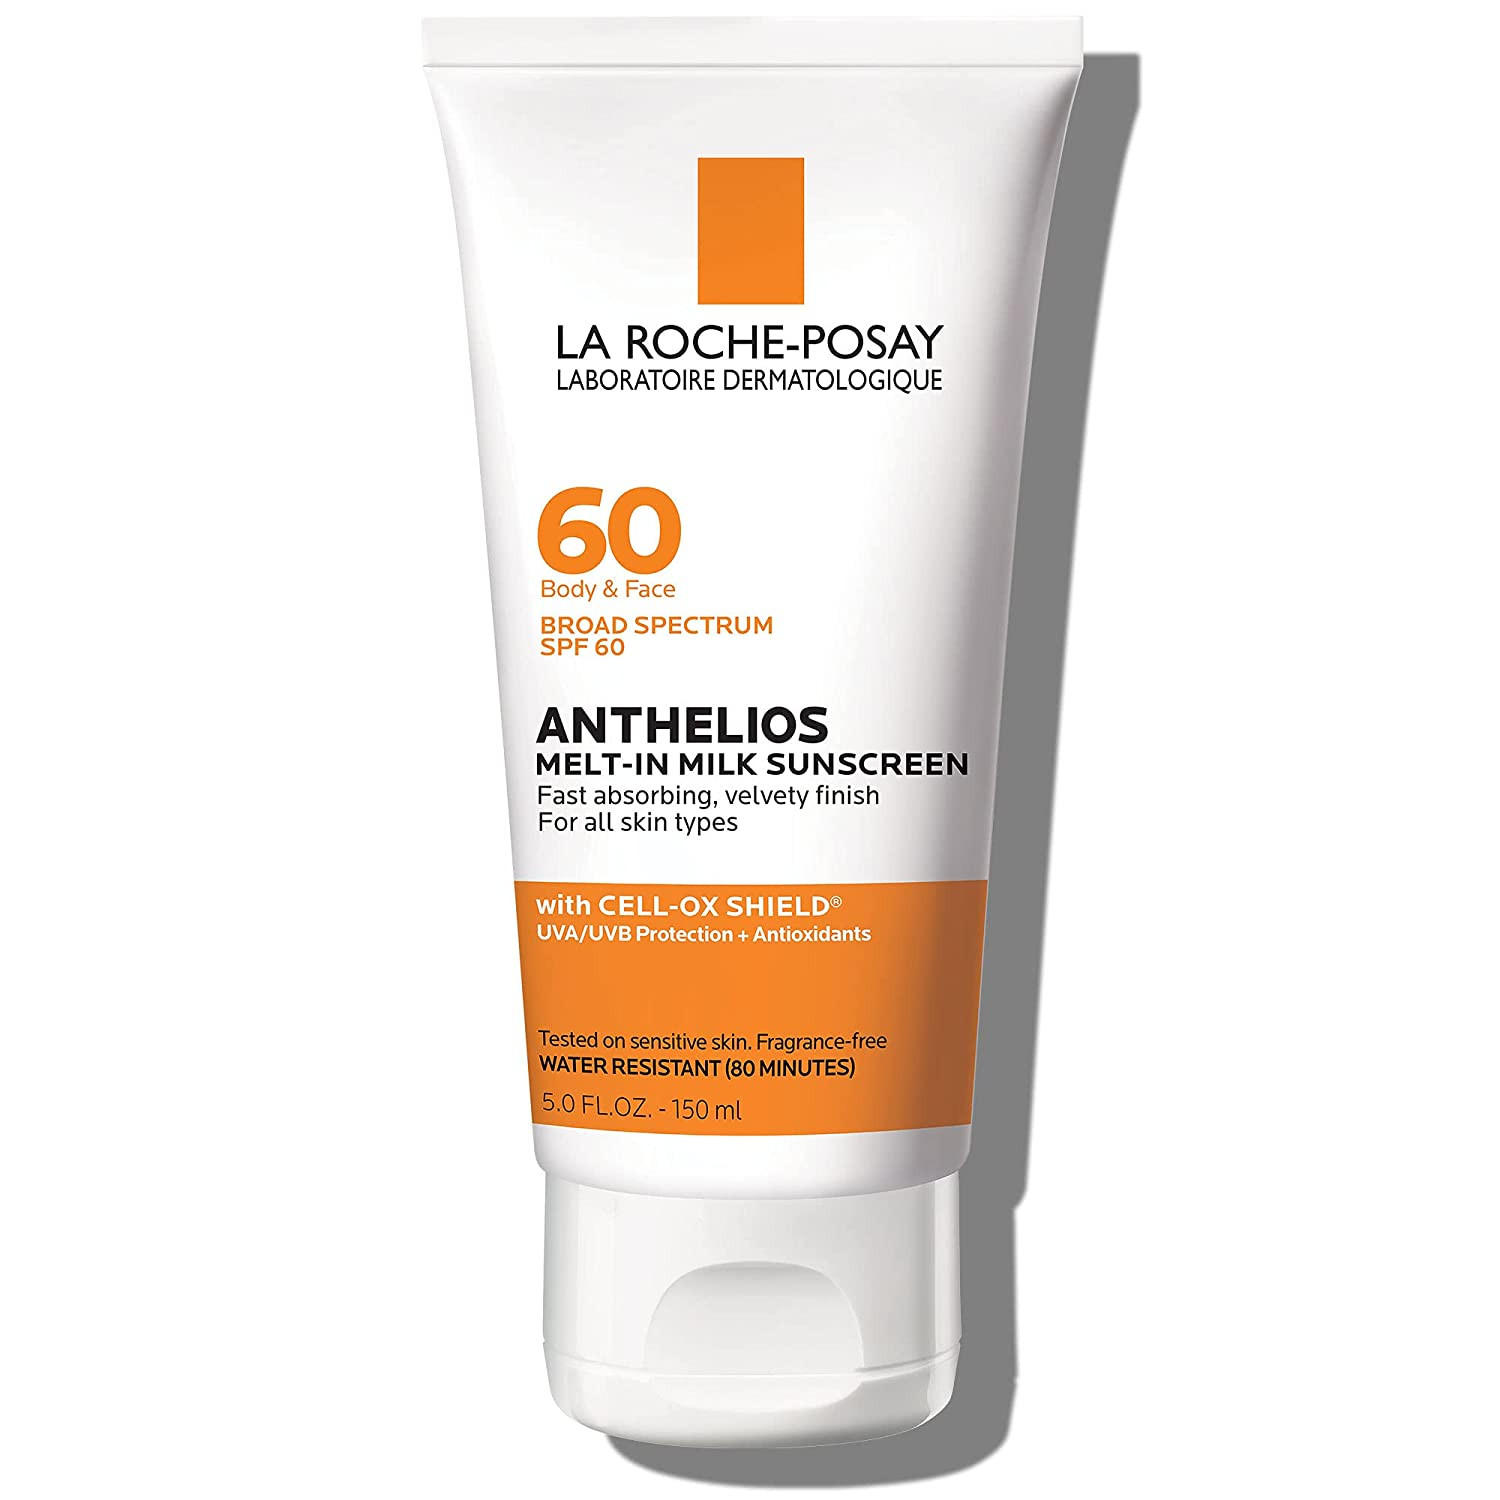 La Roche-Posay ANTHELIOS Melt-In Milk Sunscreen Mini